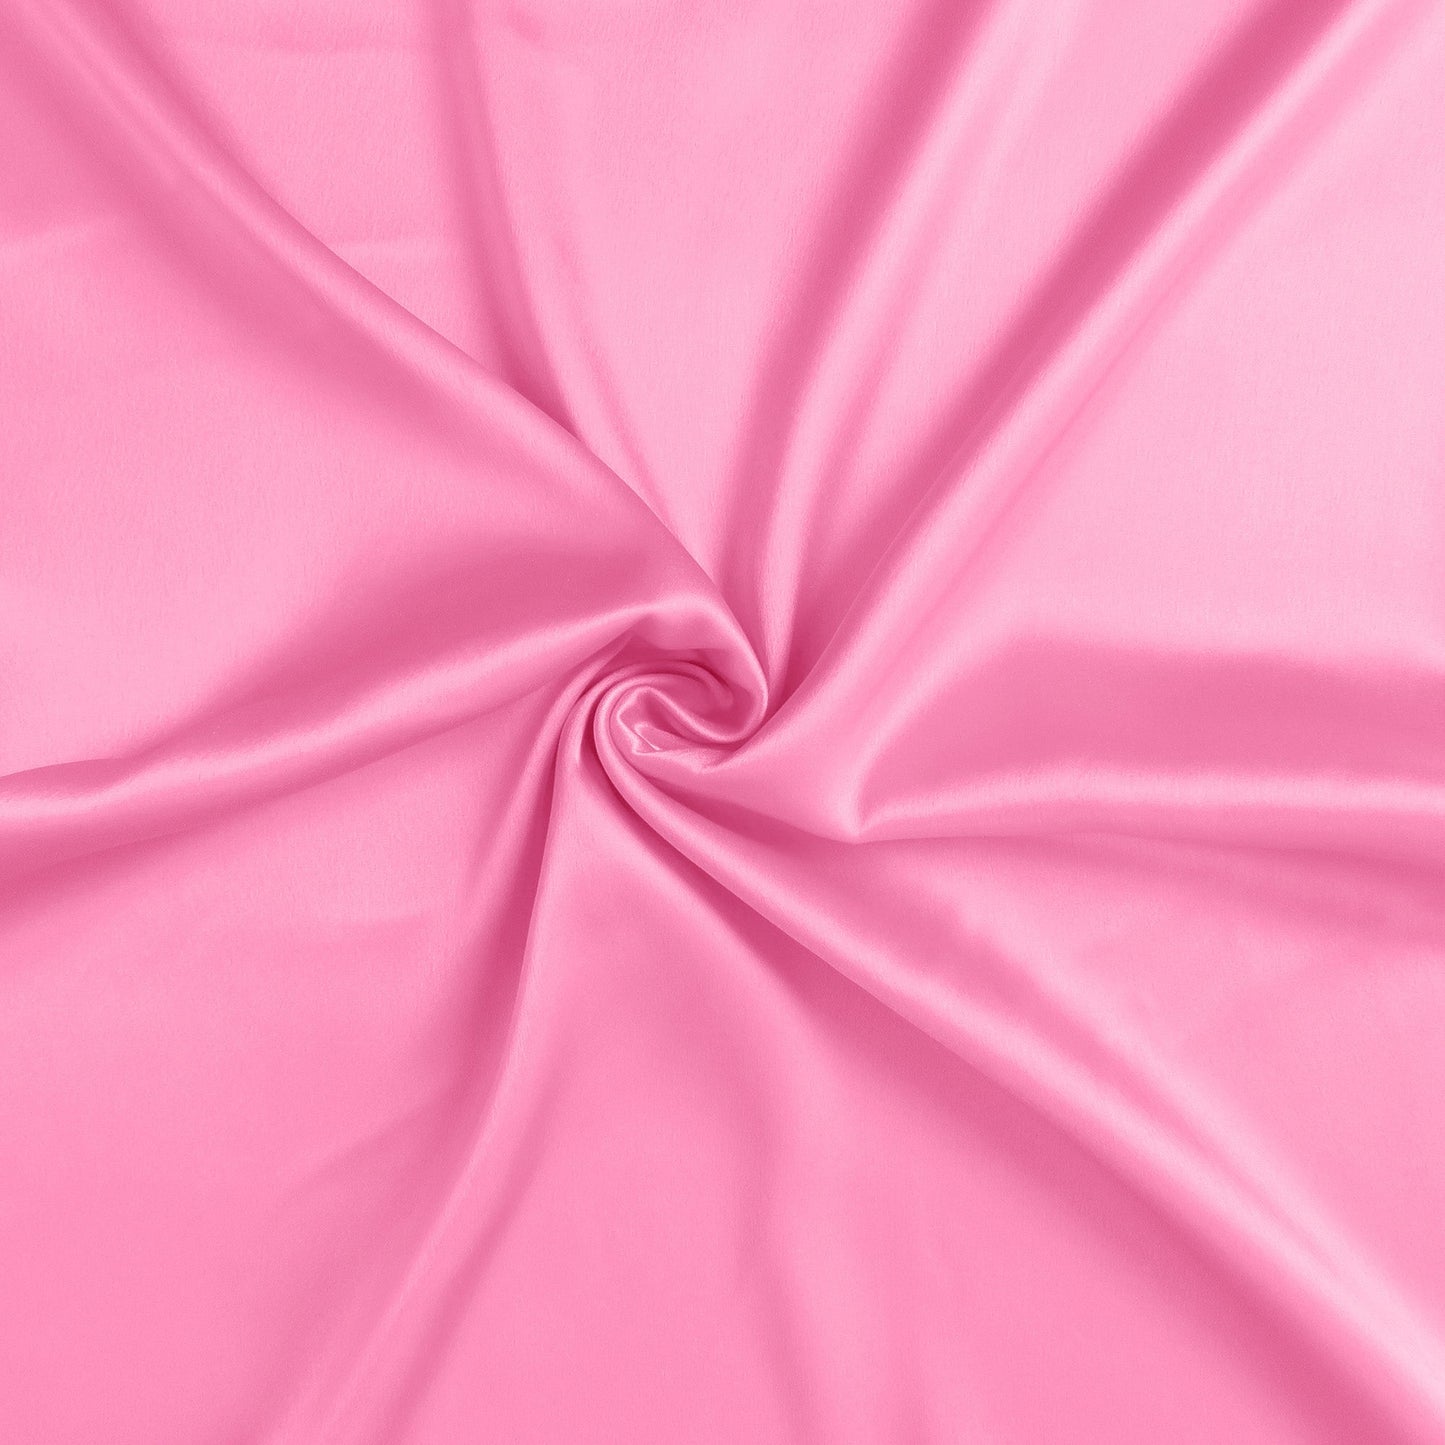 Luxury Soft Plain Satin Silk Pillowcases in Set of 2 - Fandango Pink